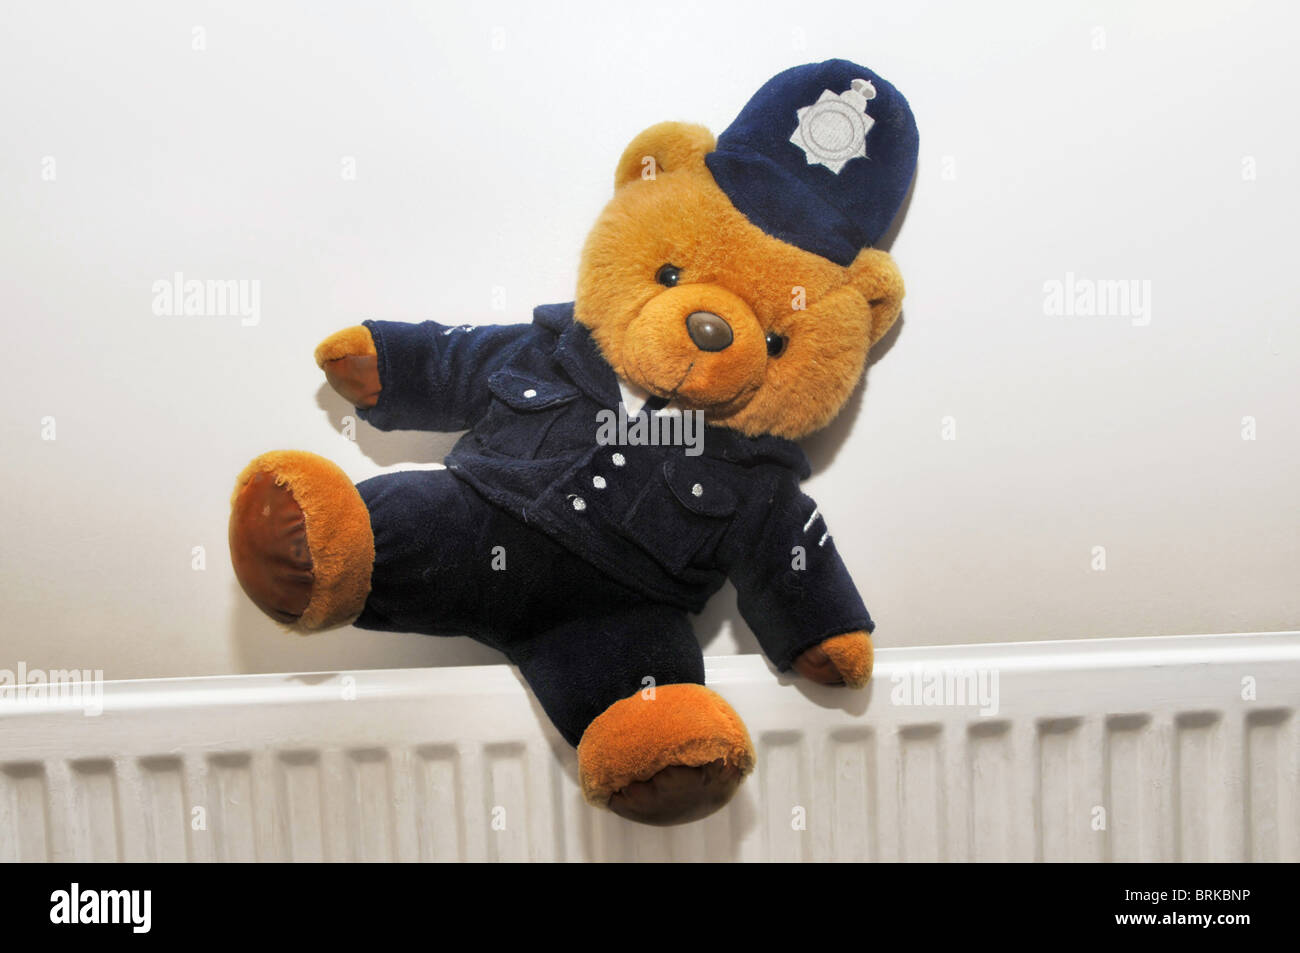 A teddy bear dressed as a policeman sitting awry on a central heating radiator. Stock Photo